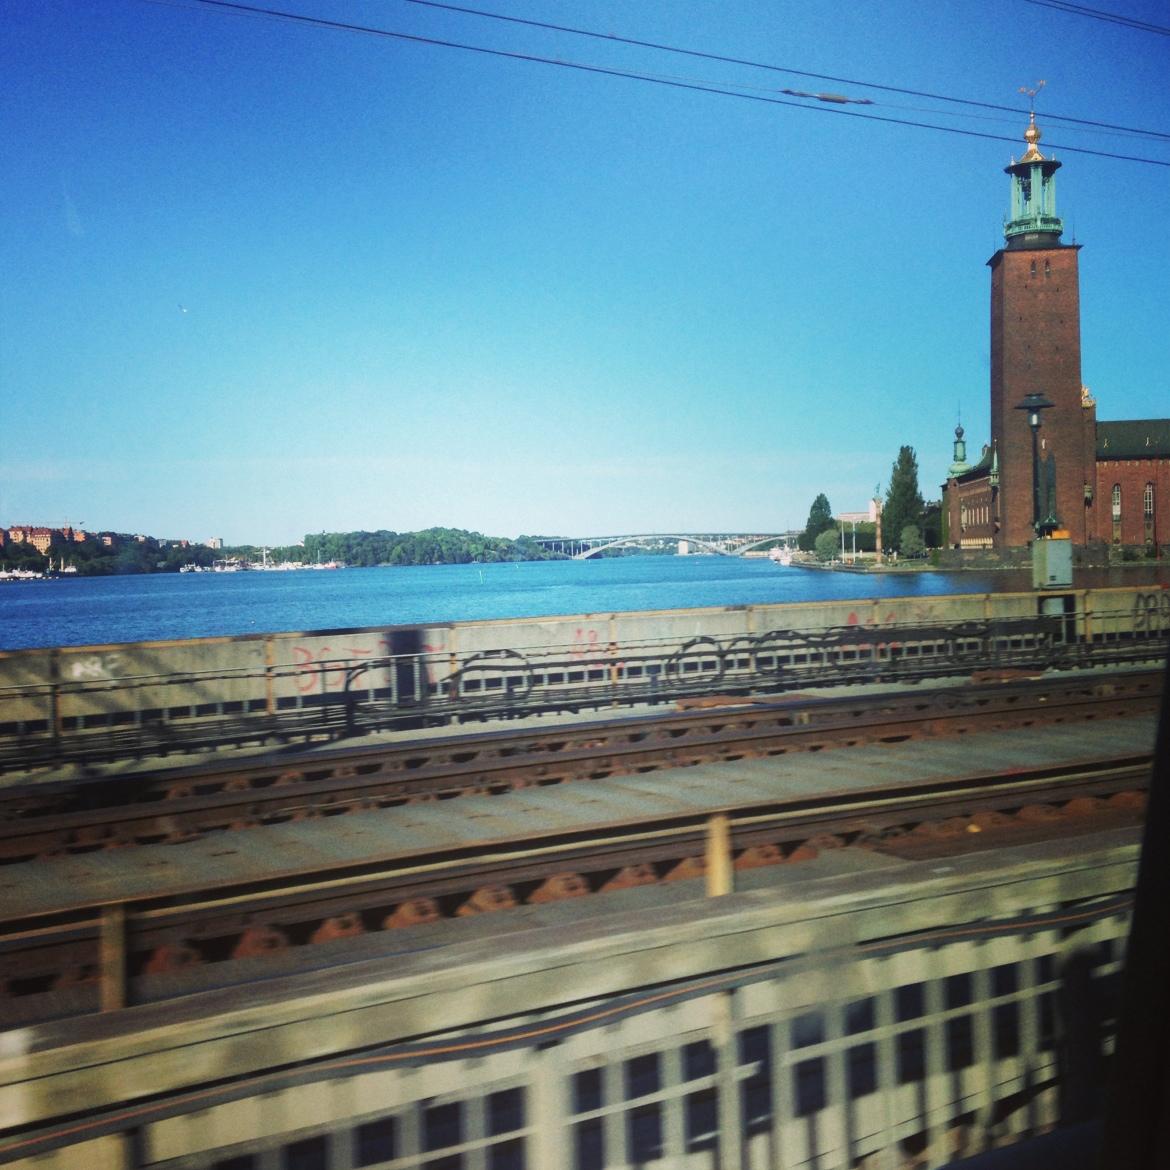 Tidig morgon i Stockholm :)